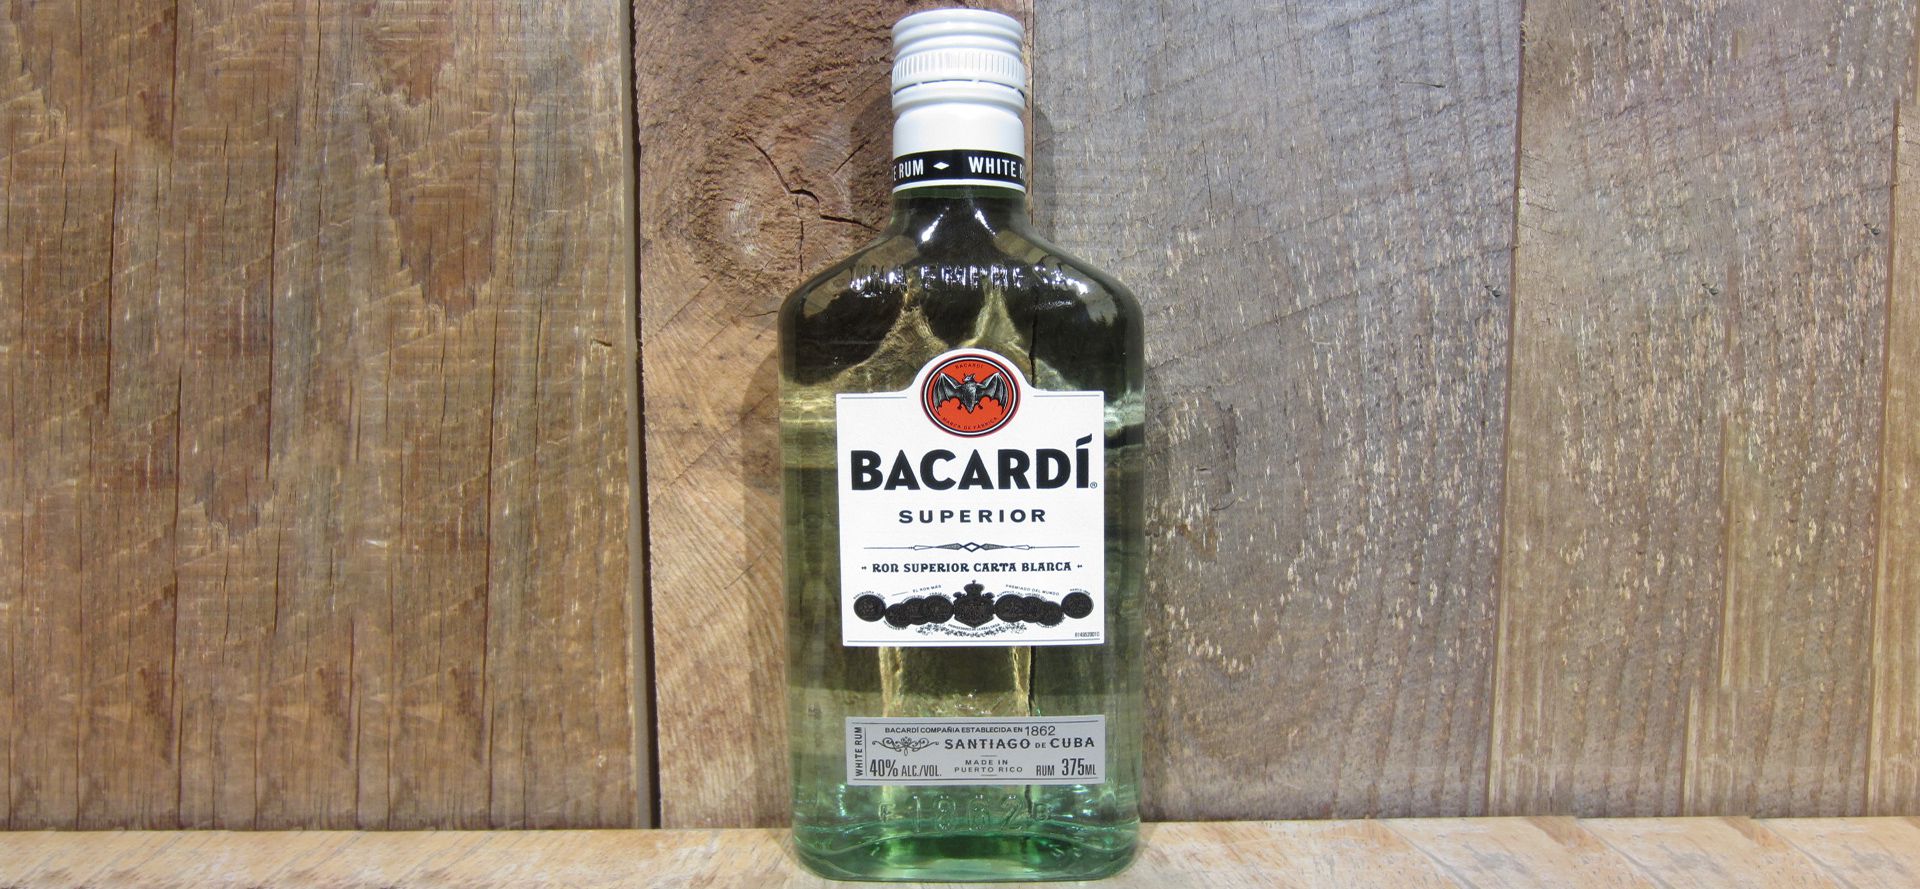 White Rum Bacardi.